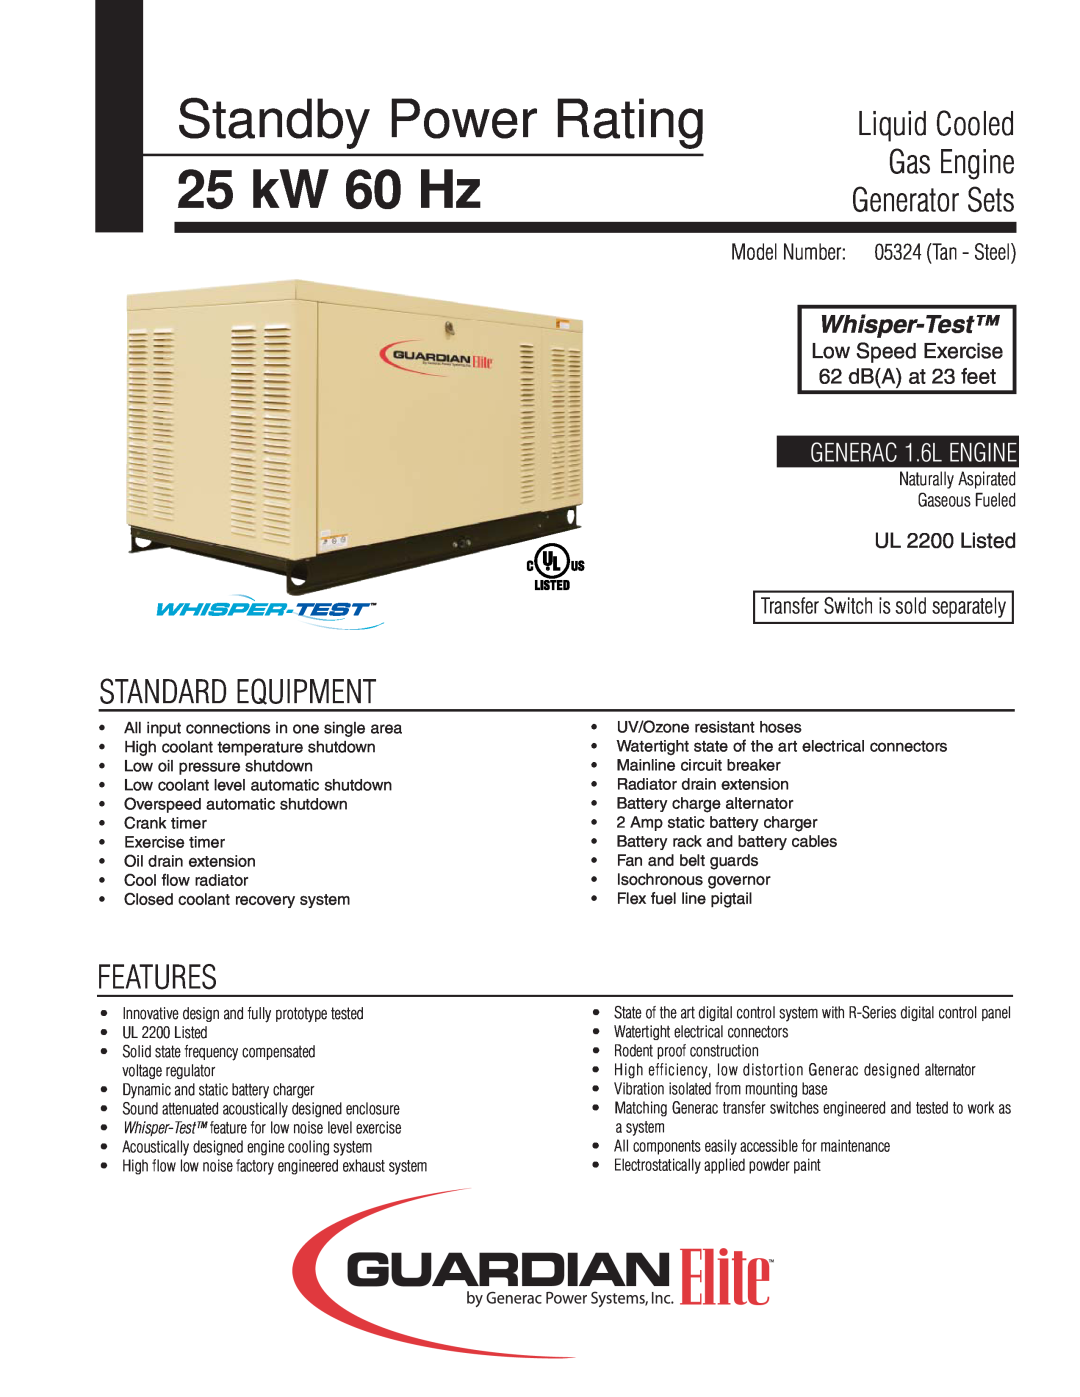 Guardian Technologies 05324 manual Standby Power Rating, 25 kW 60 Hz, Liquid Cooled, Generator Sets, Standard Equipment 